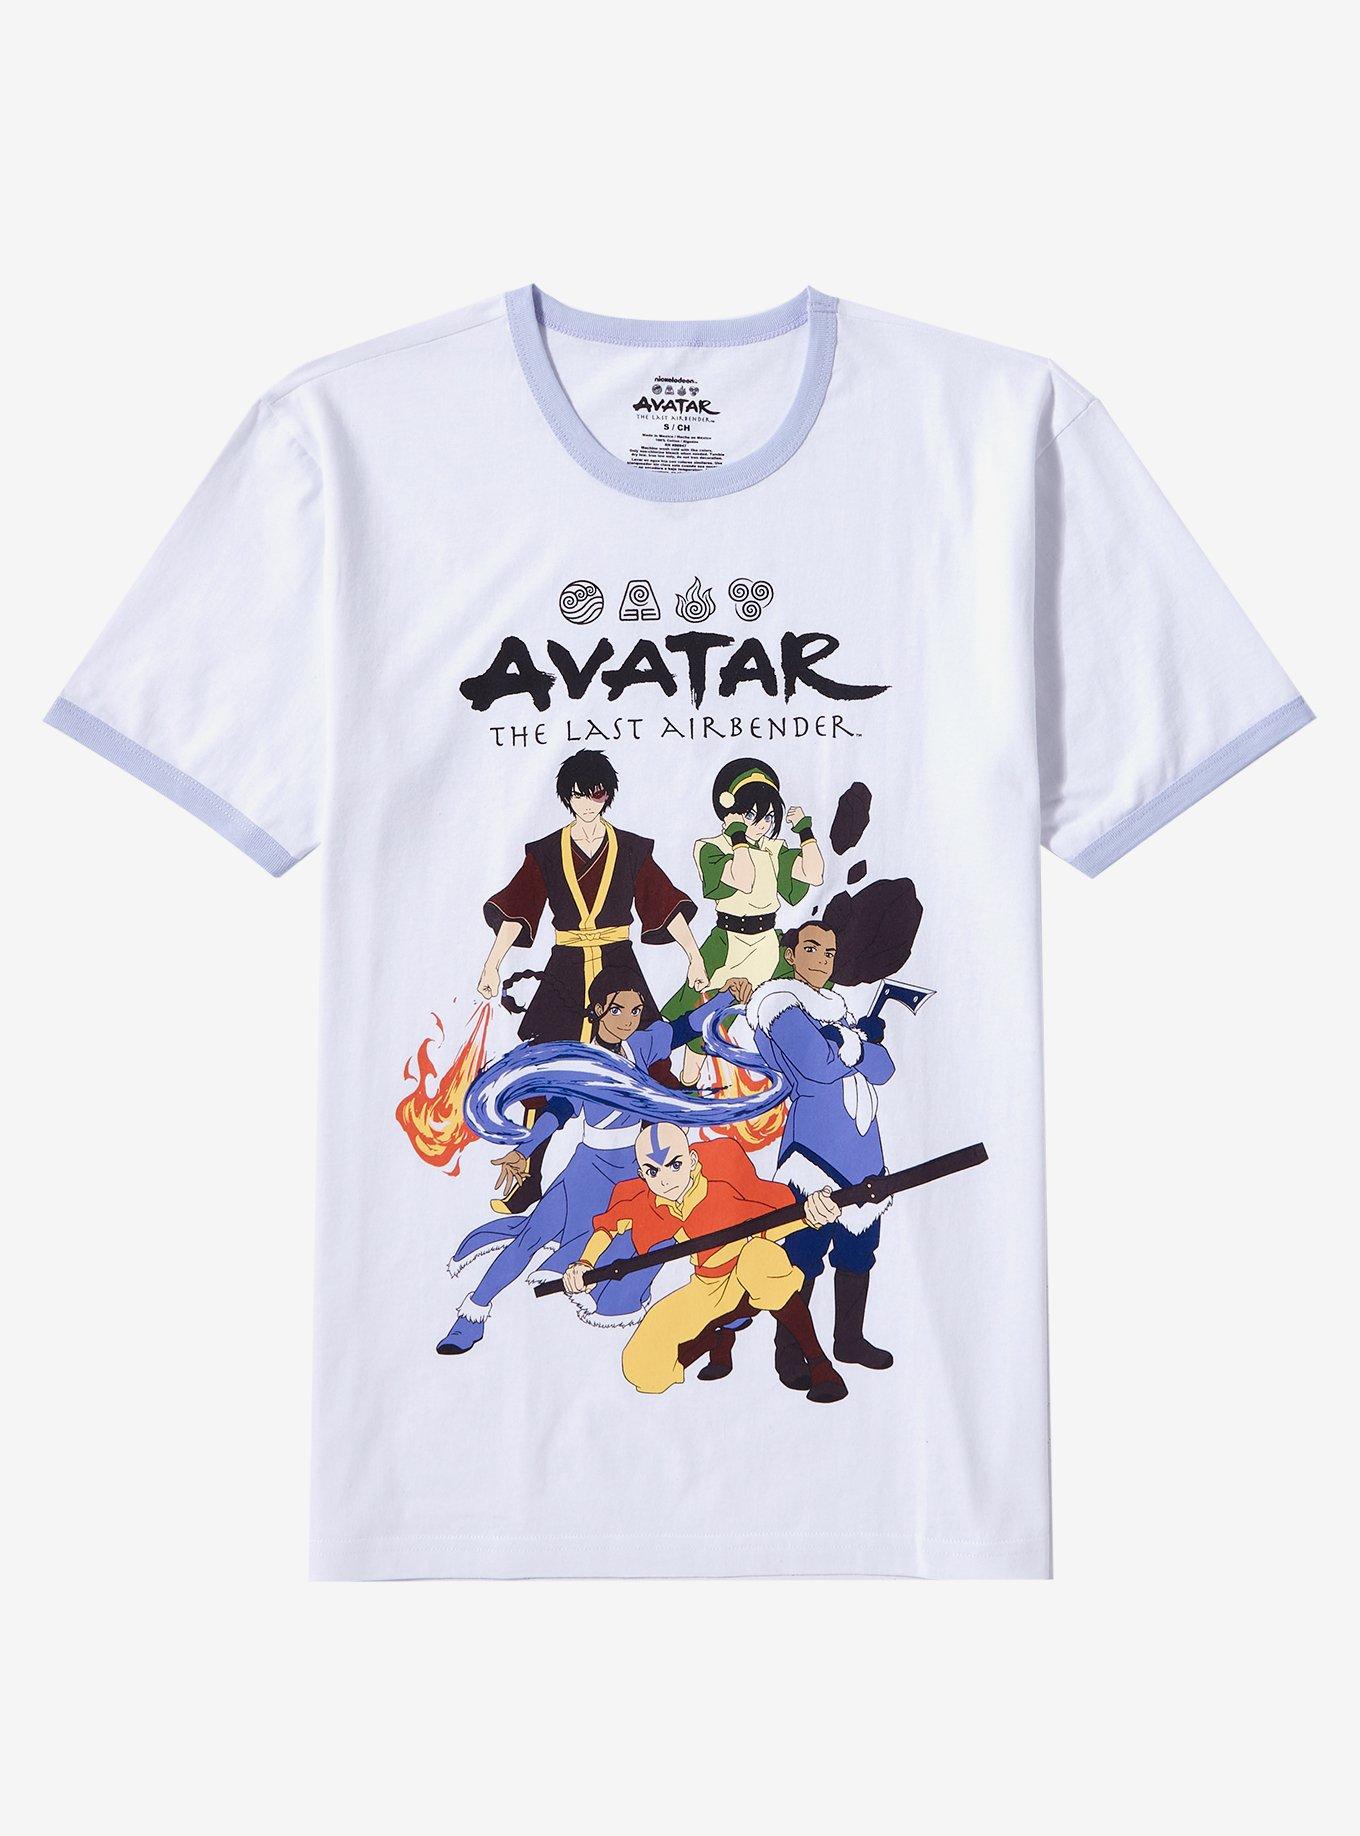 Avatar: The Last Airbender Characters Boyfriend Girls Ringer T-Shirt